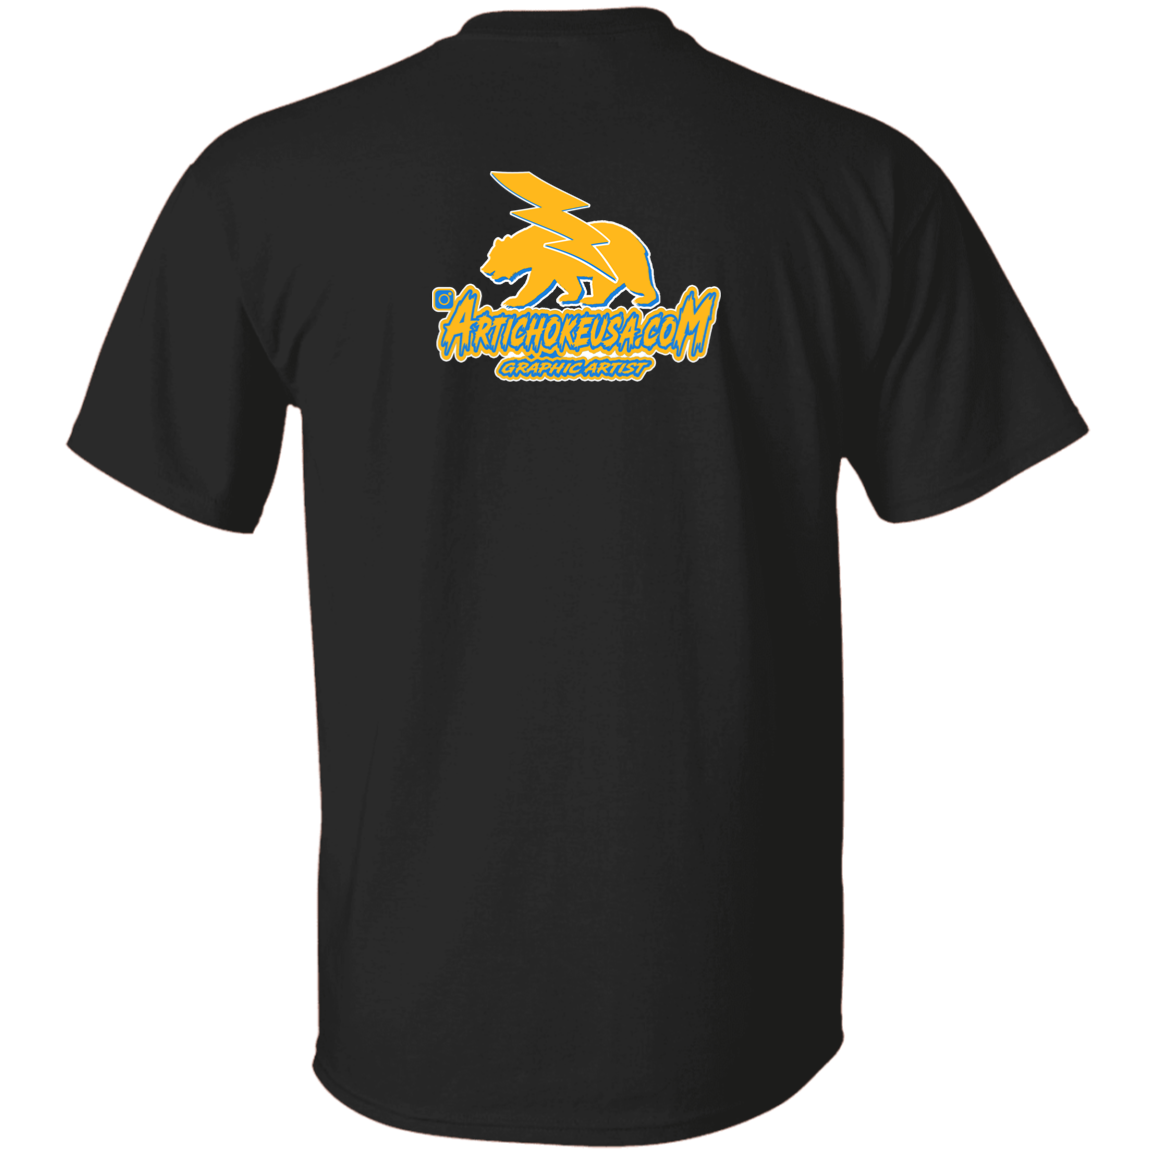 ArtichokeUSA Custom Design. Los Angeles Chargers Fan Art. 5.3 oz. T-Shirt